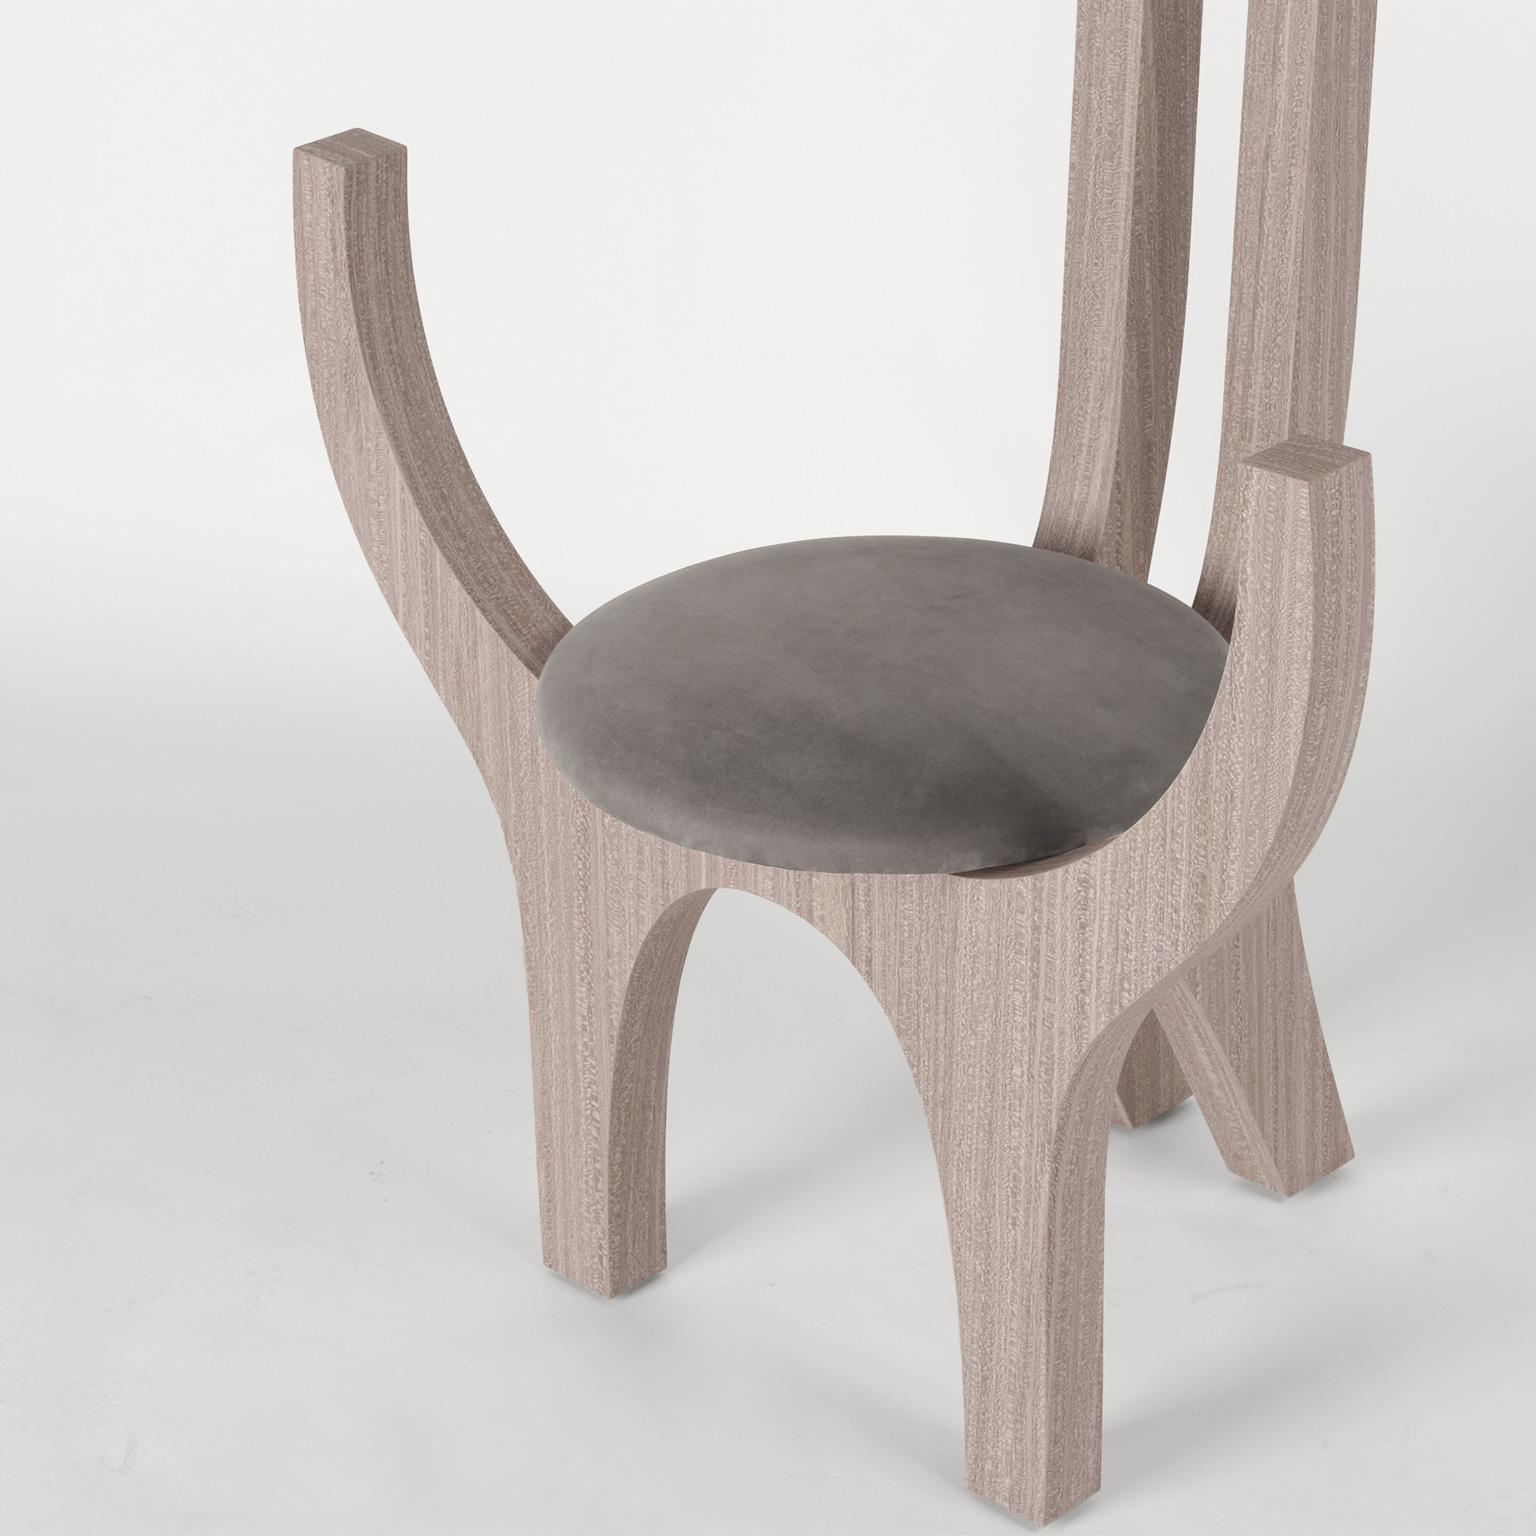 Contemporary Limited Edition Ash Wood Armchair, Zero V2 by Edizione Limitata For Sale 5